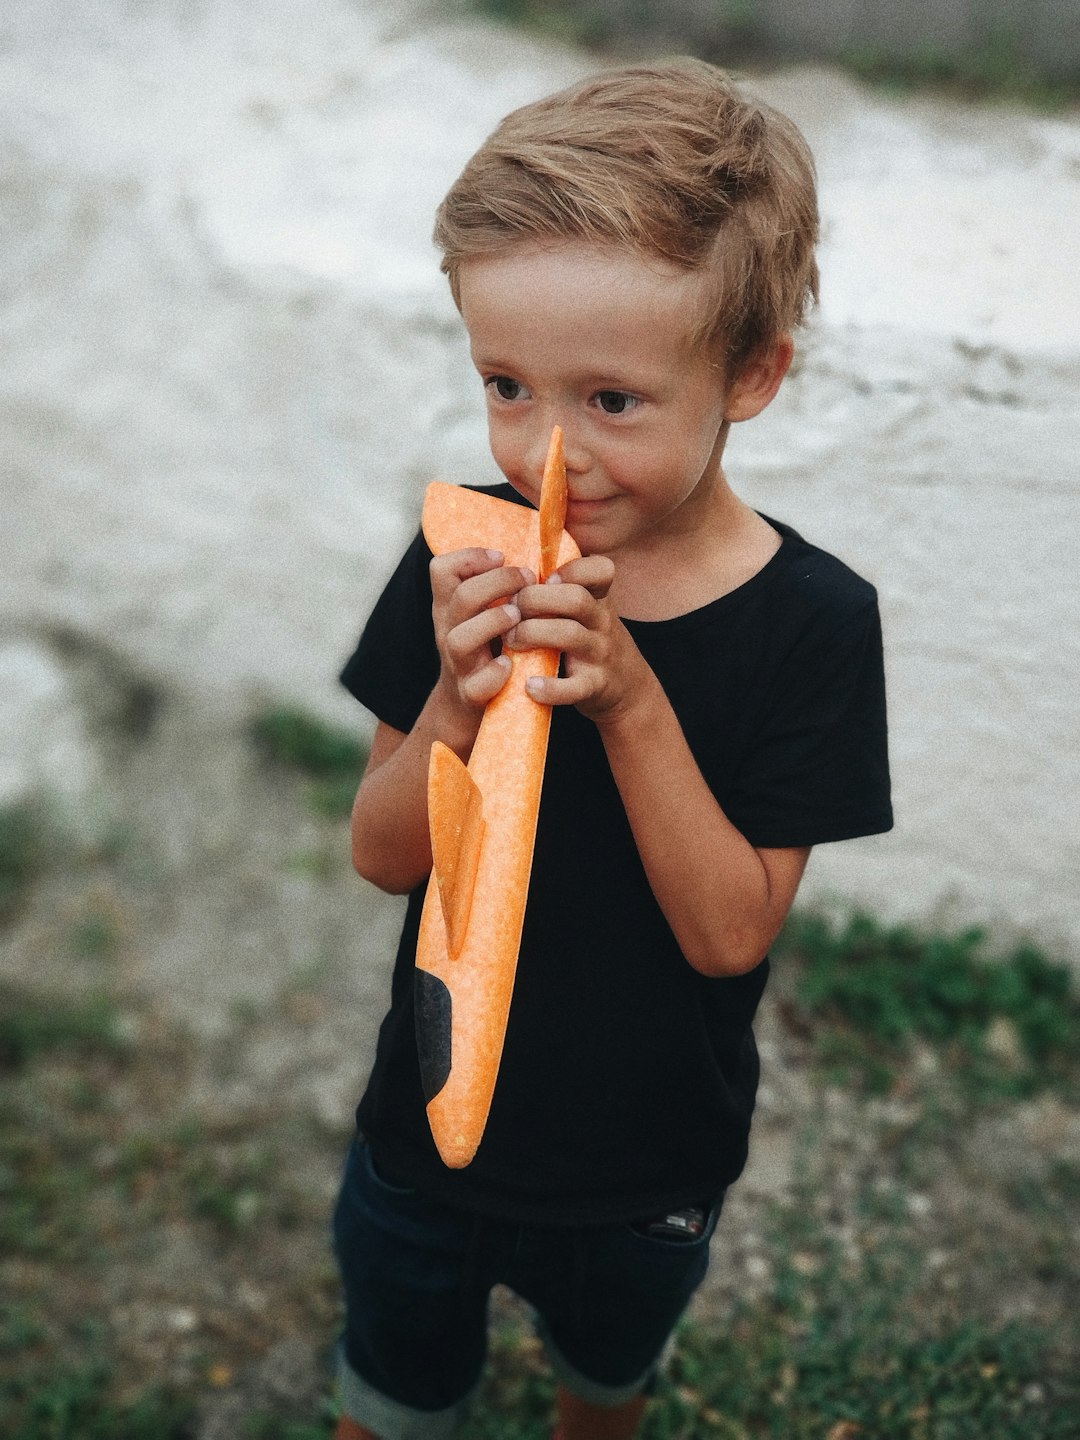 boy holding orange plastic plane toy